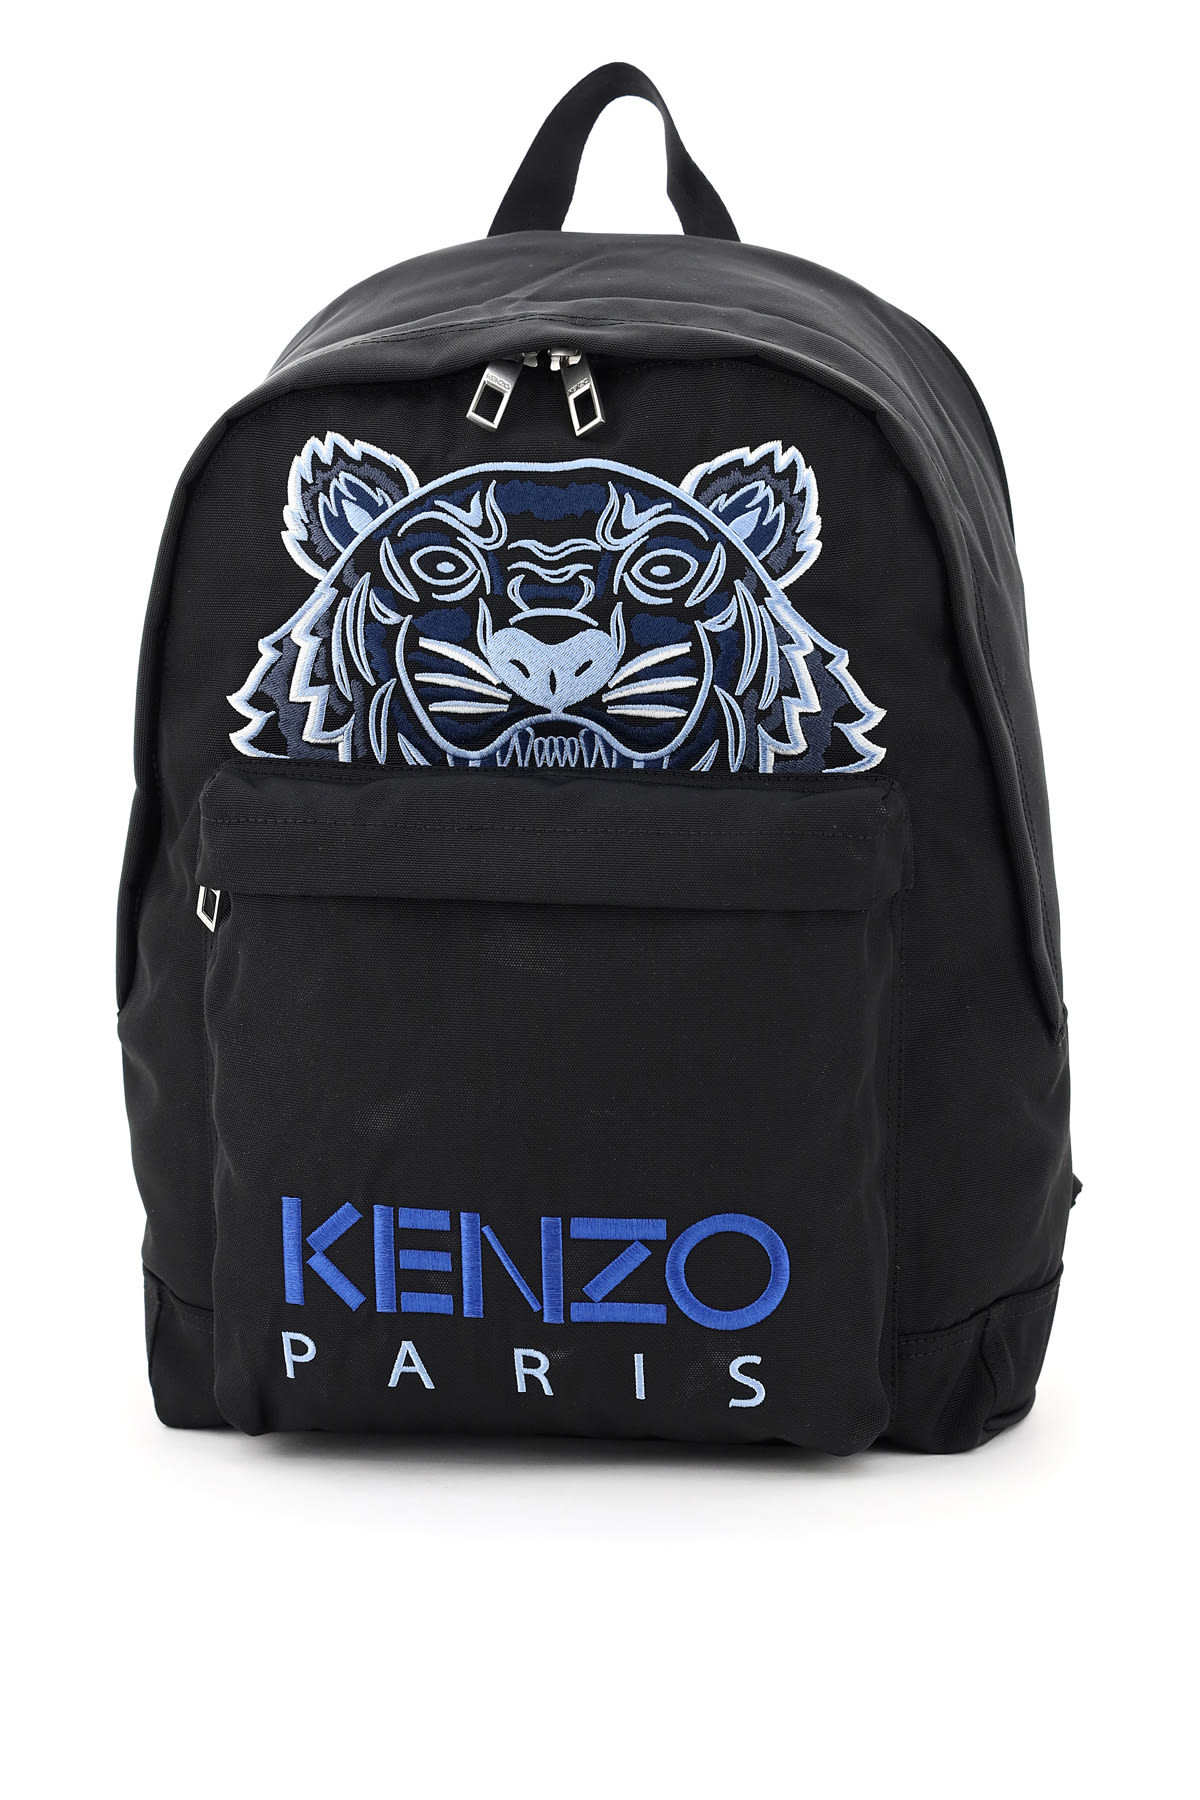 kenzo large backpack